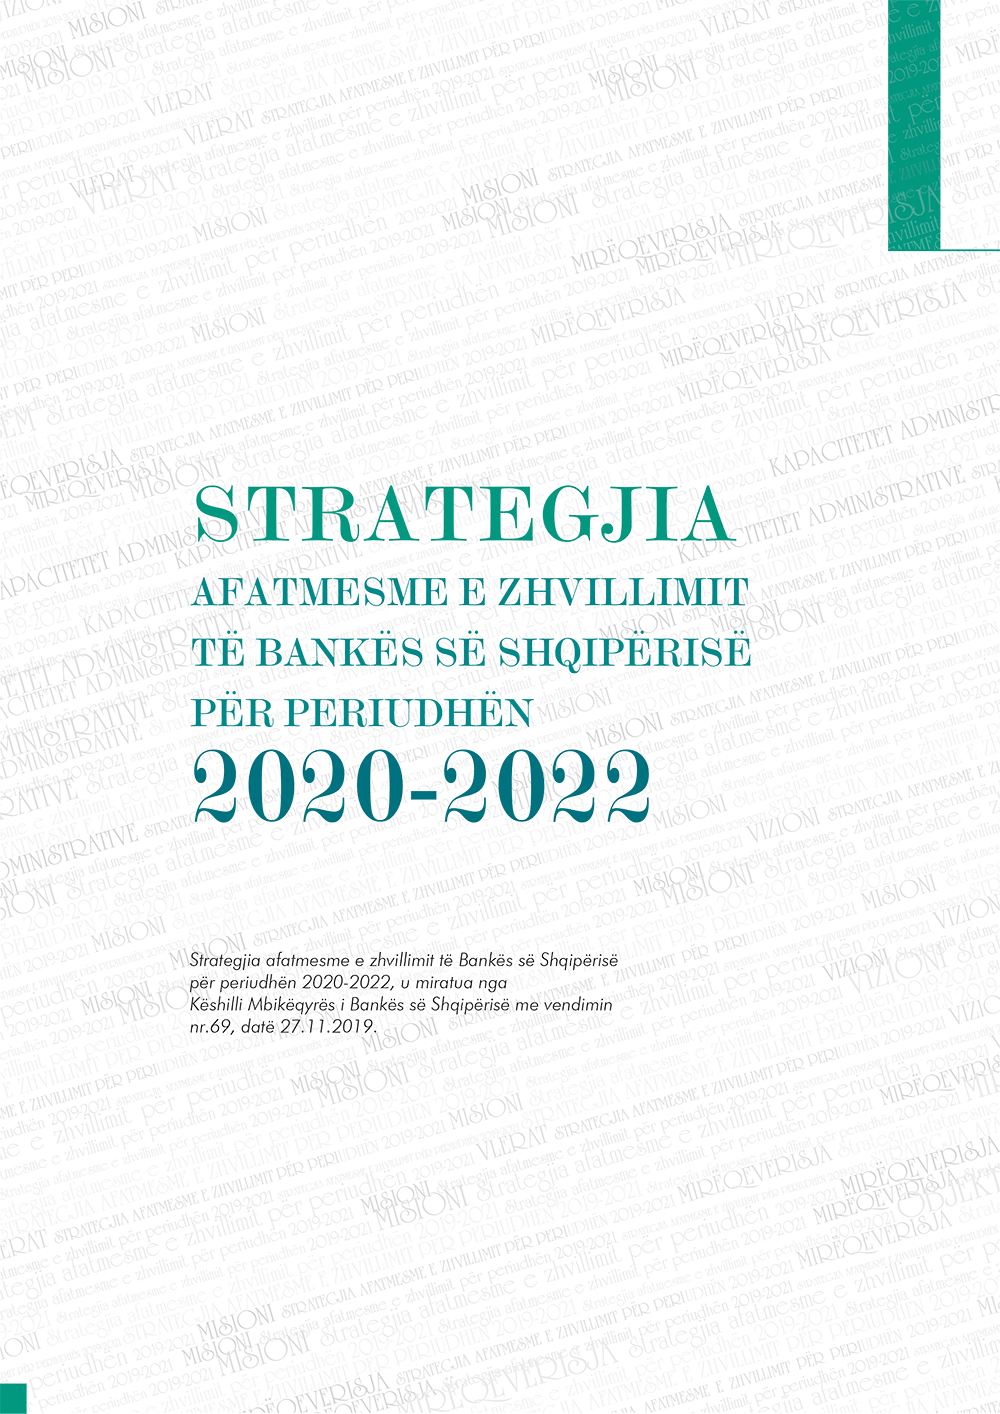 The Medium -Term Development Strategy of the Bank of Albania 2020-2022